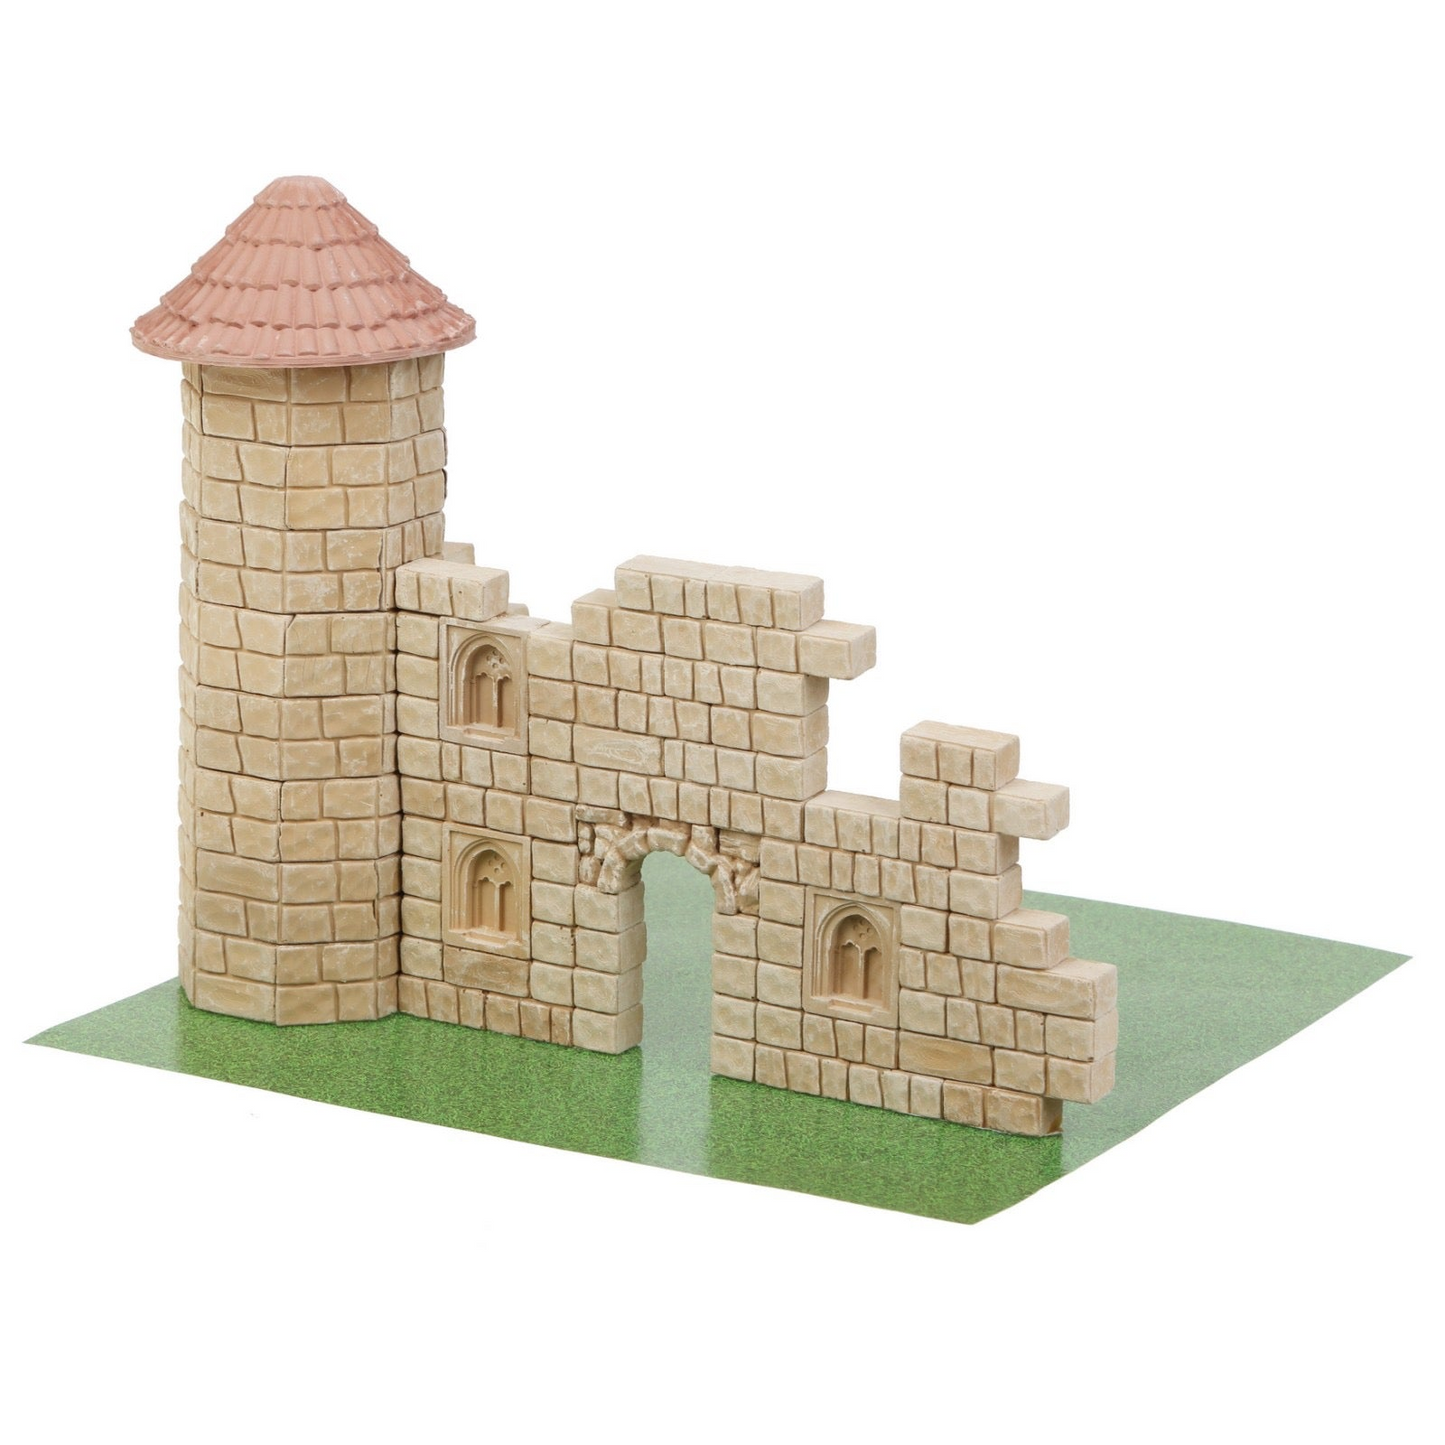 Mini Bricks Construction Set - Ruins of Palace